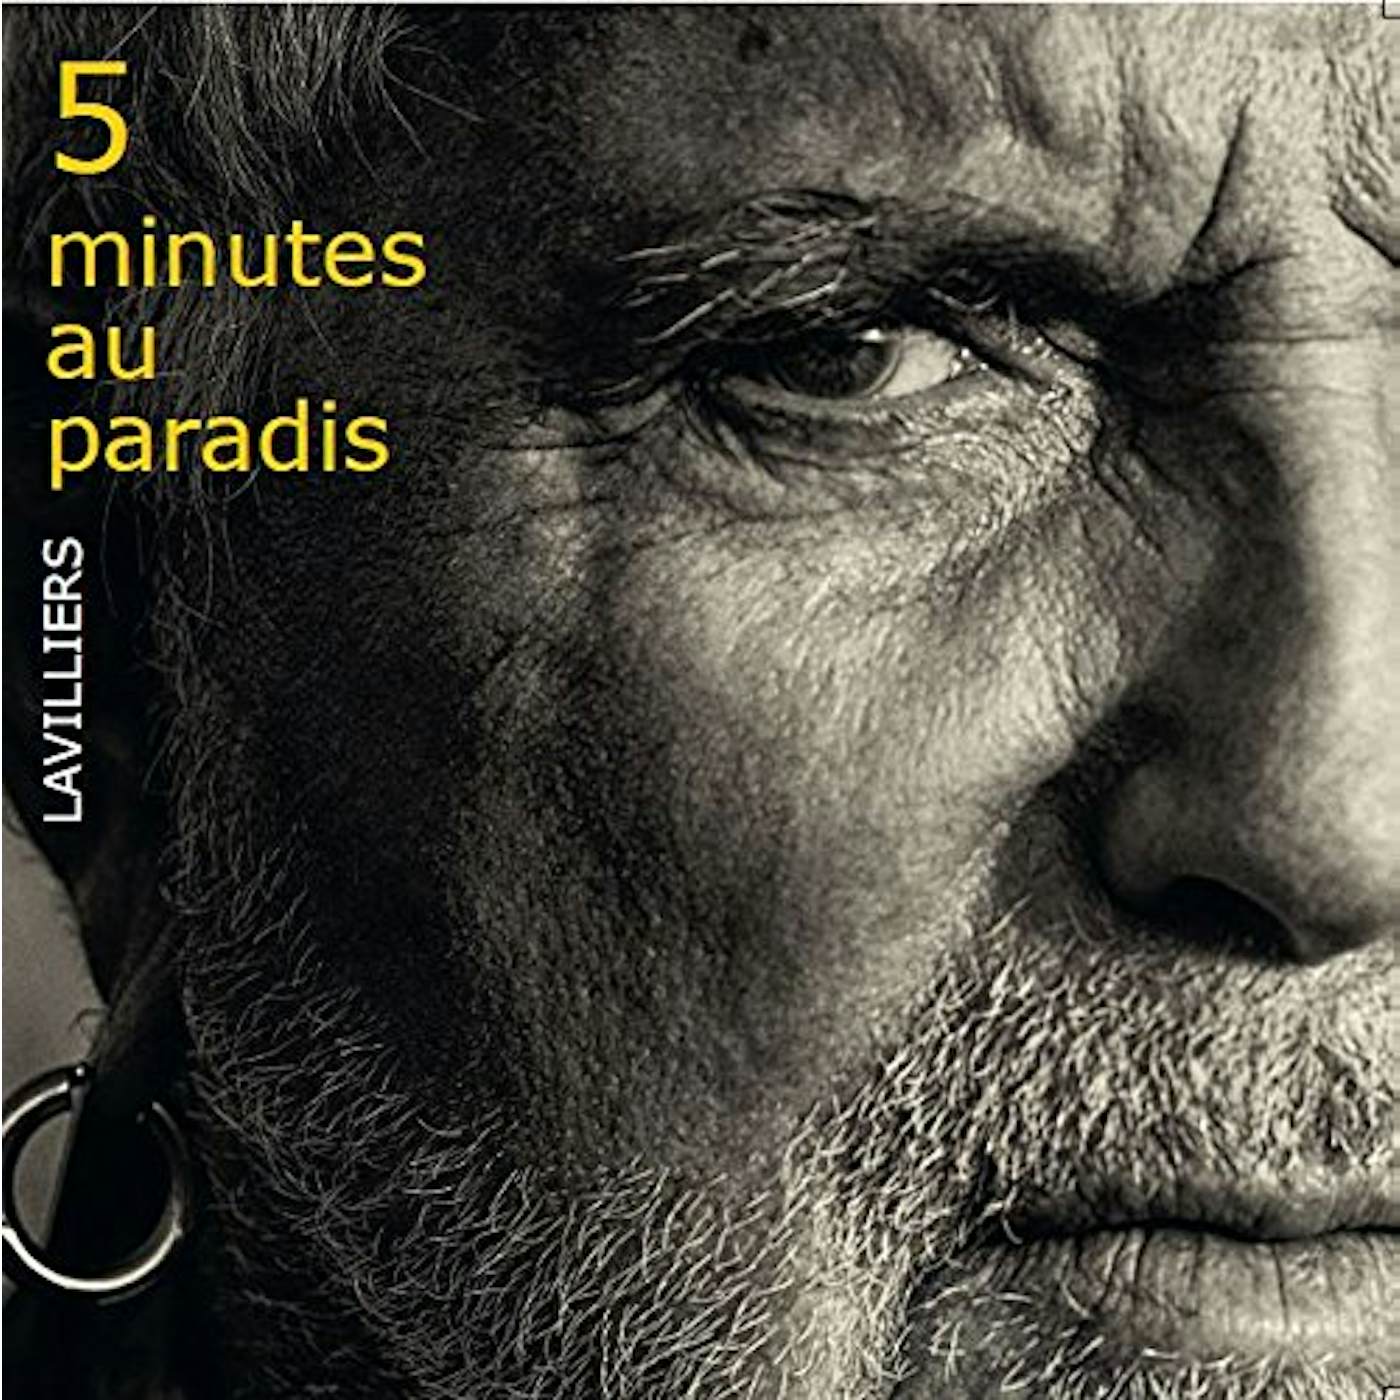 Bernard Lavilliers 5 minutes au paradis Vinyl Record